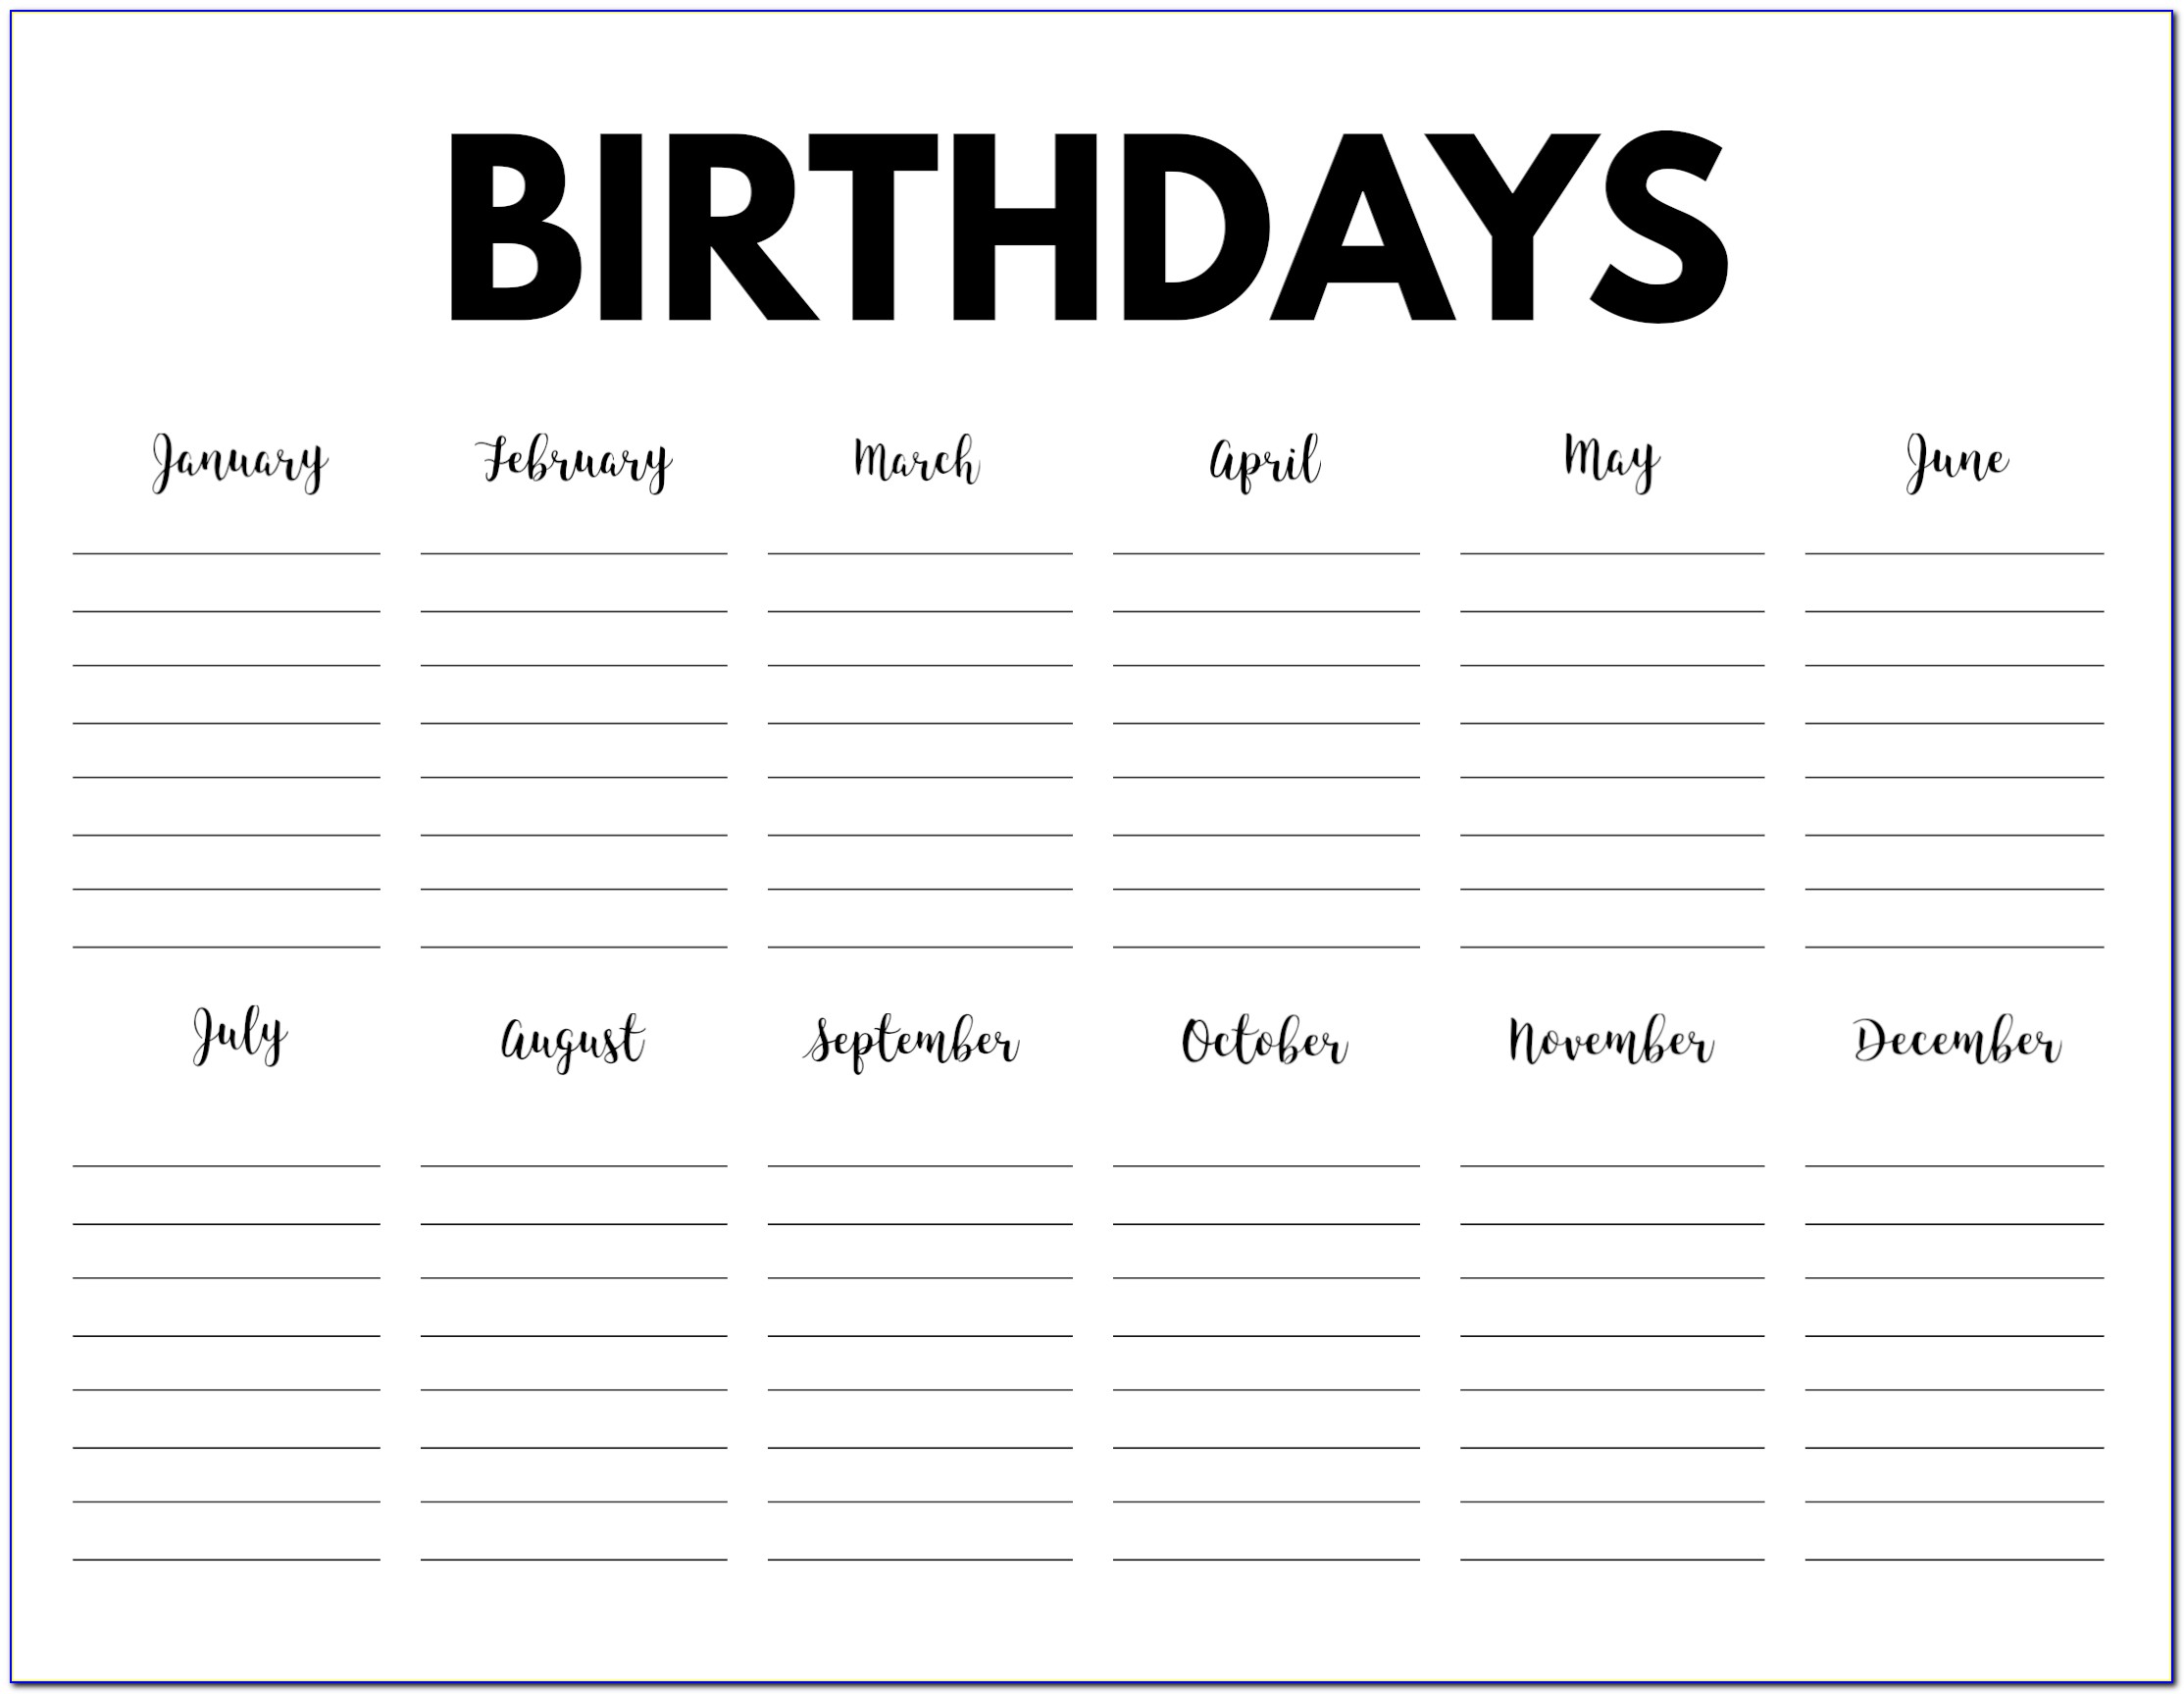 Birthday Calendars Free Printable